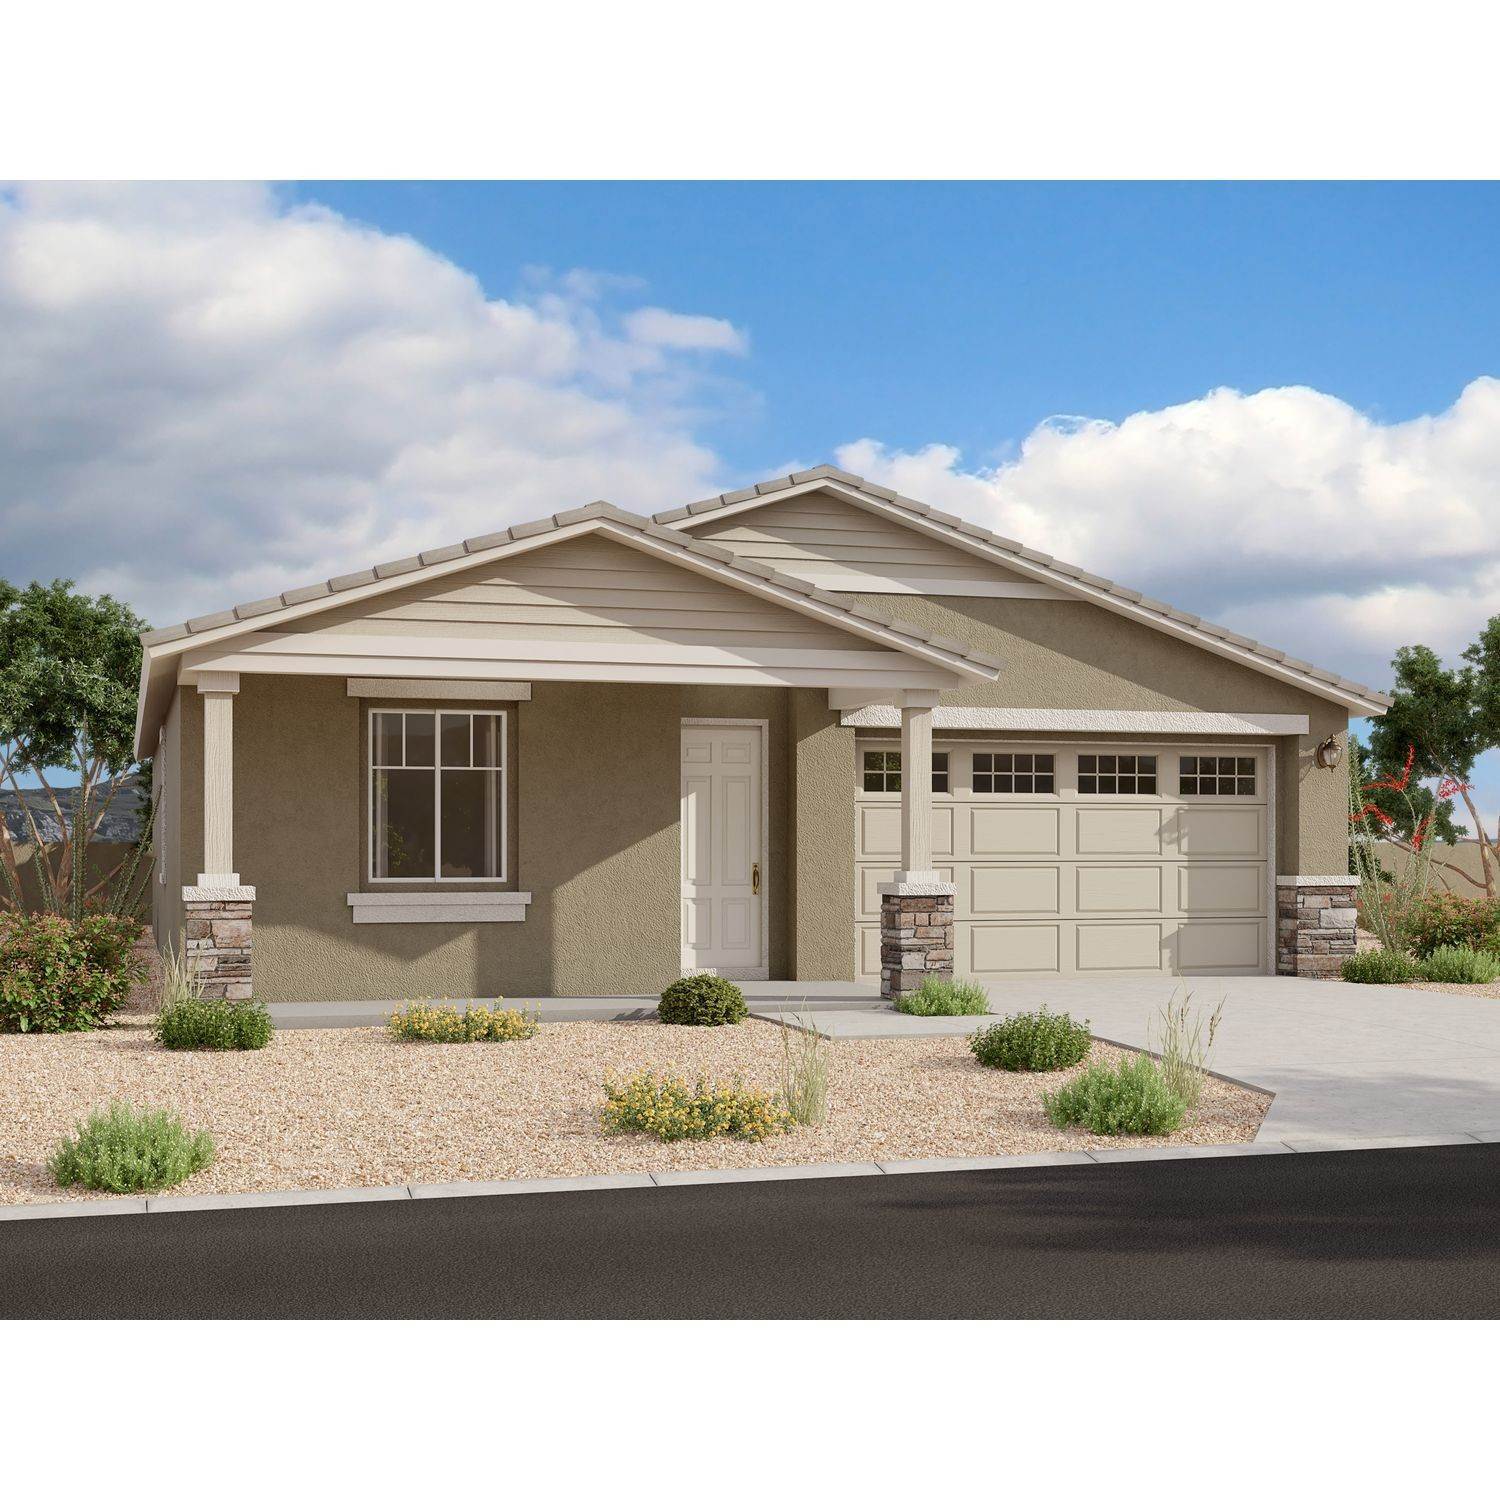 Single Family for Sale at Destination At Gateway 6061 South Oxley, Mesa, AZ 85212